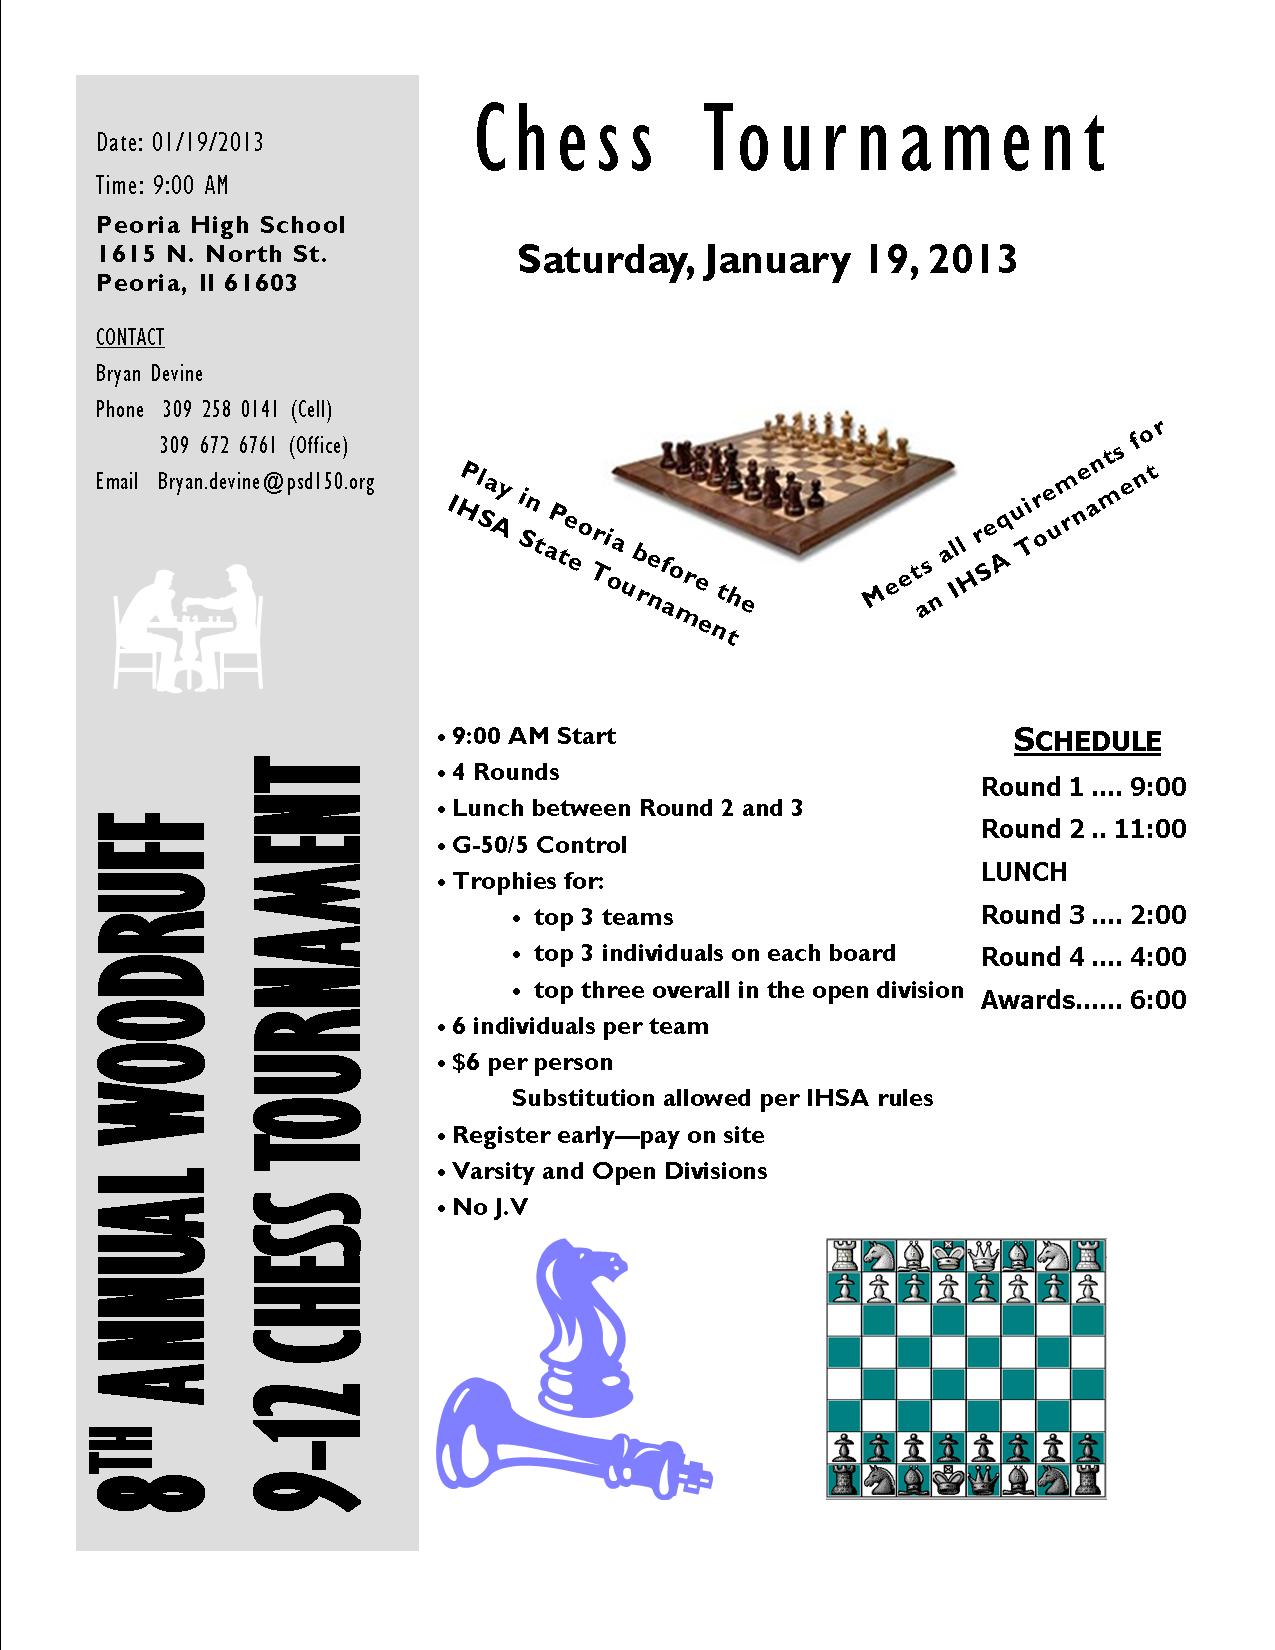 Image:D150-2013 Chess Tourney.jpg